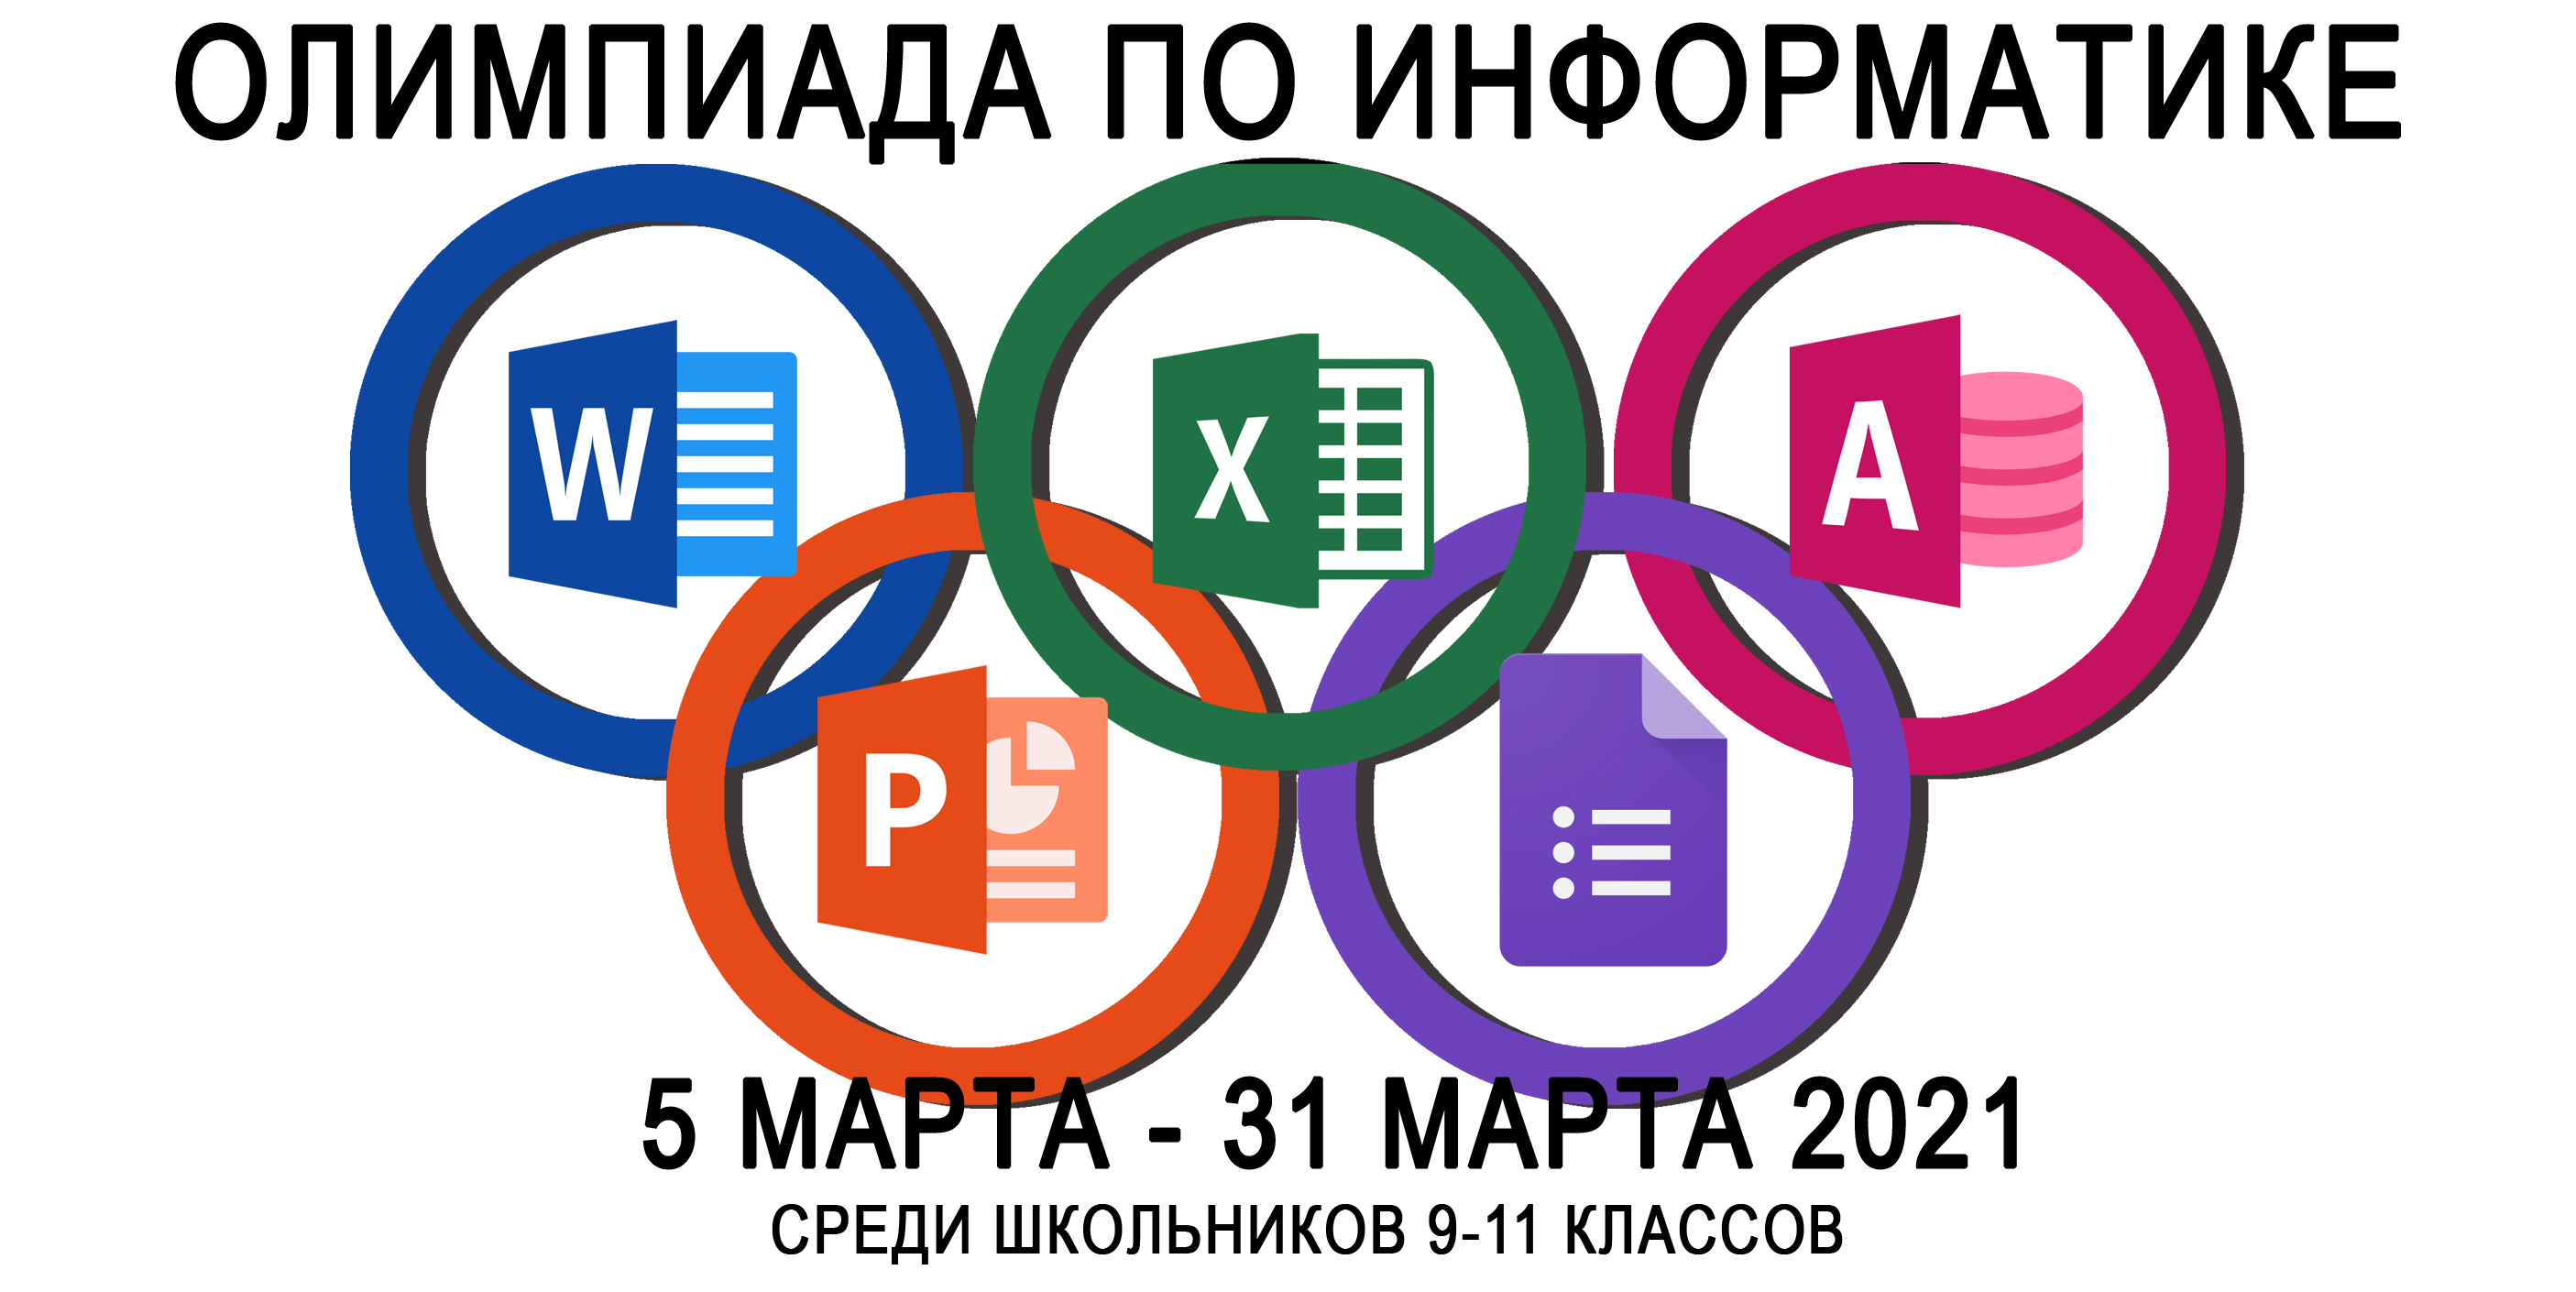 Informatika olimpiada. Программа олимпиады по информатике.